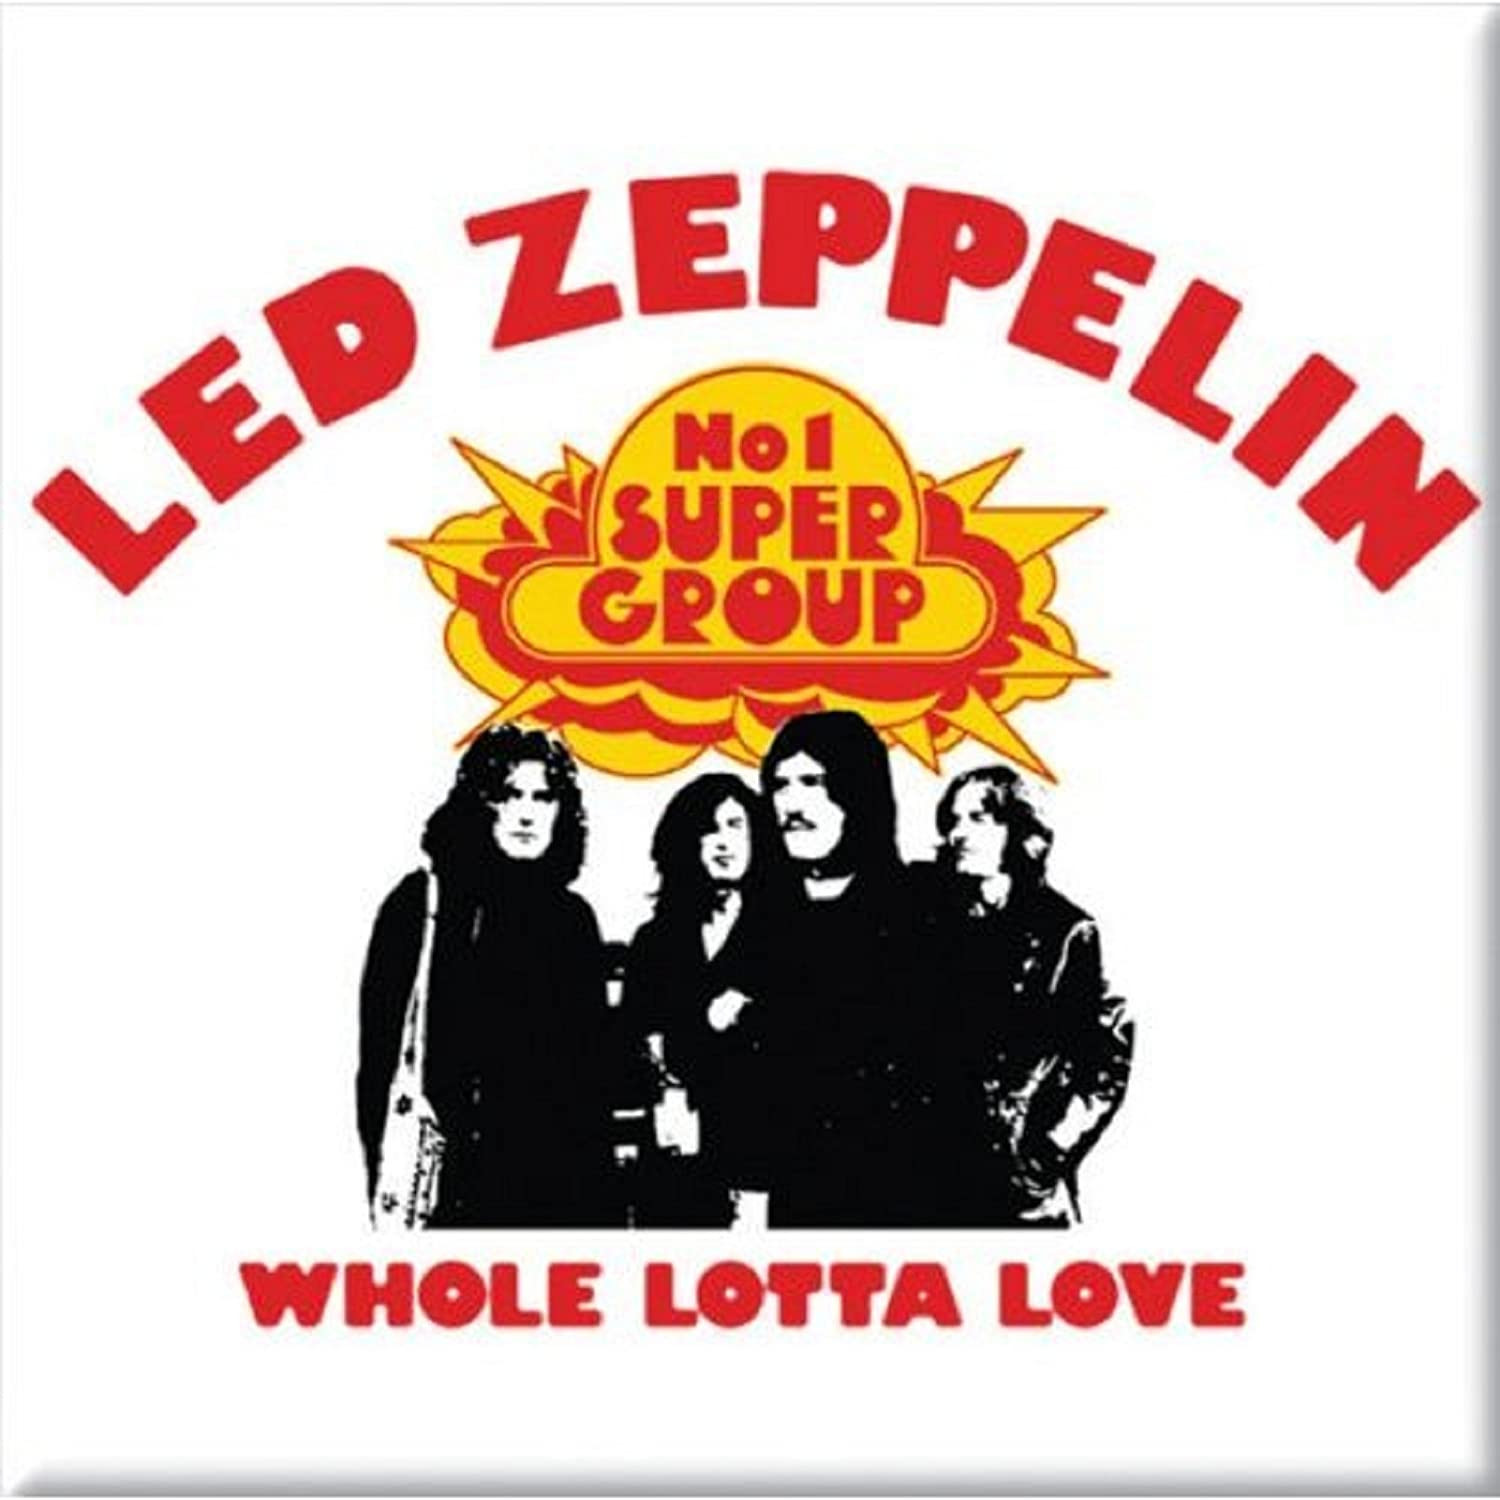 Led zeppelin's whole lotta love. Группа led Zeppelin. Led Zeppelin 1969. Led Zeppelin «whole Lotta Love» 1969. 1969 Led Zeppelin II обложка.